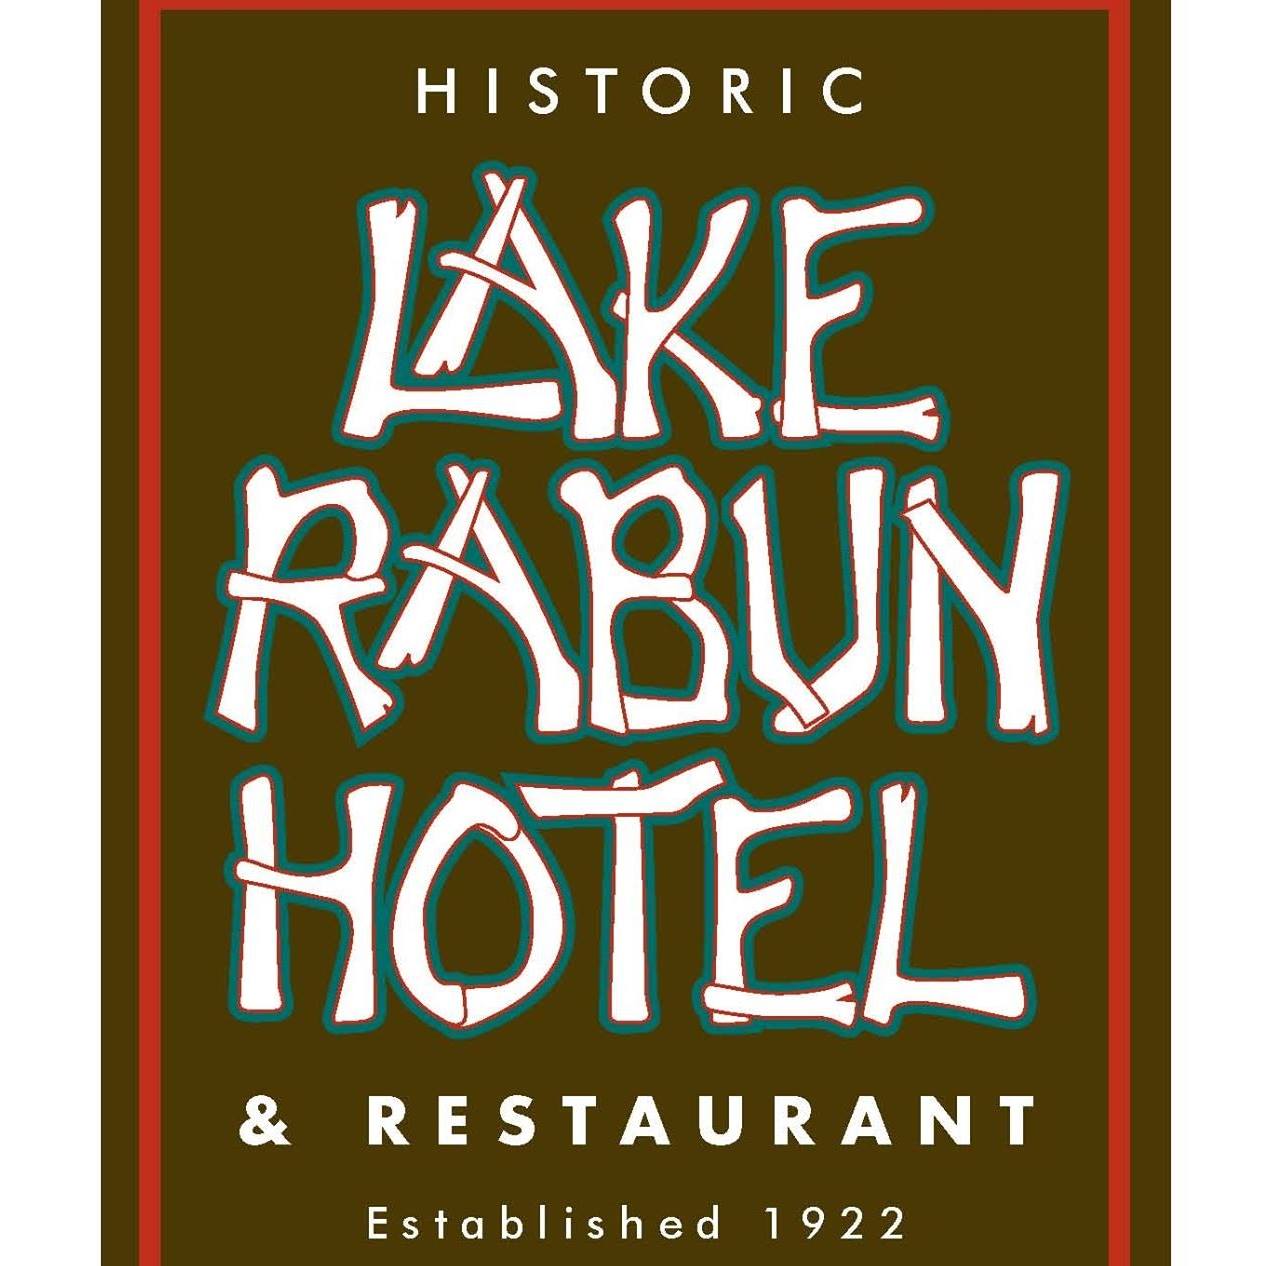 lake rabun hotel logo